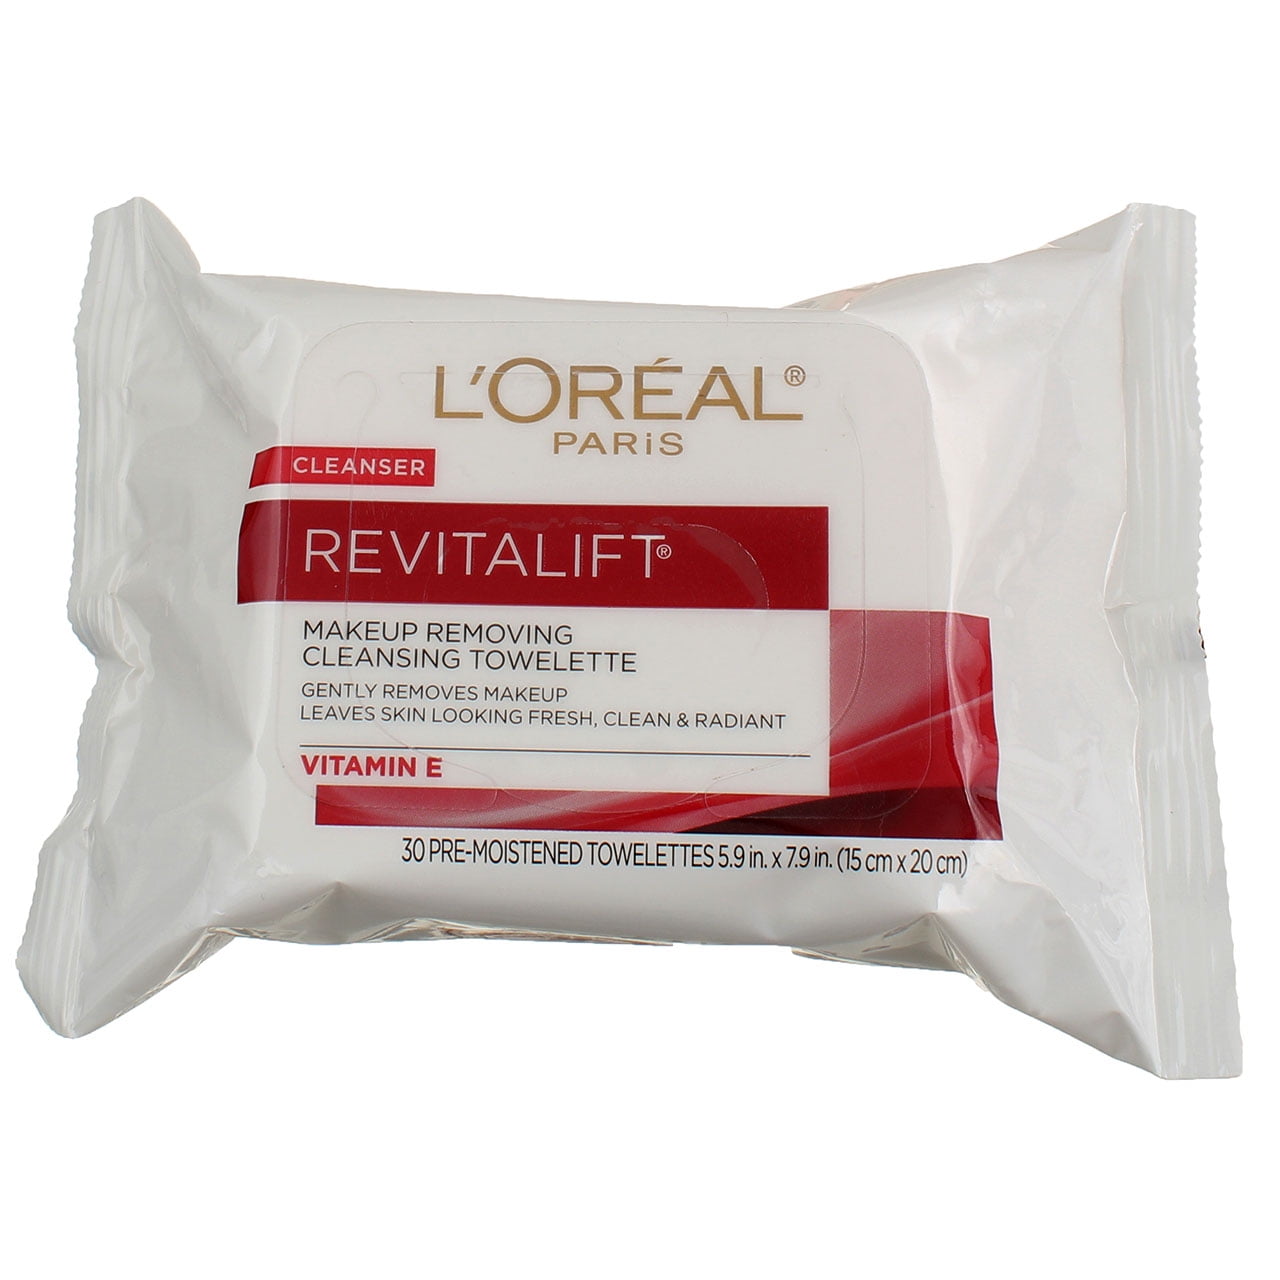 Claire Krydret Overlegenhed L'Oreal Paris RevitaLift Makeup Remover Towelettes, 30 Ct (2 pack) (Bundle)  - Walmart.com